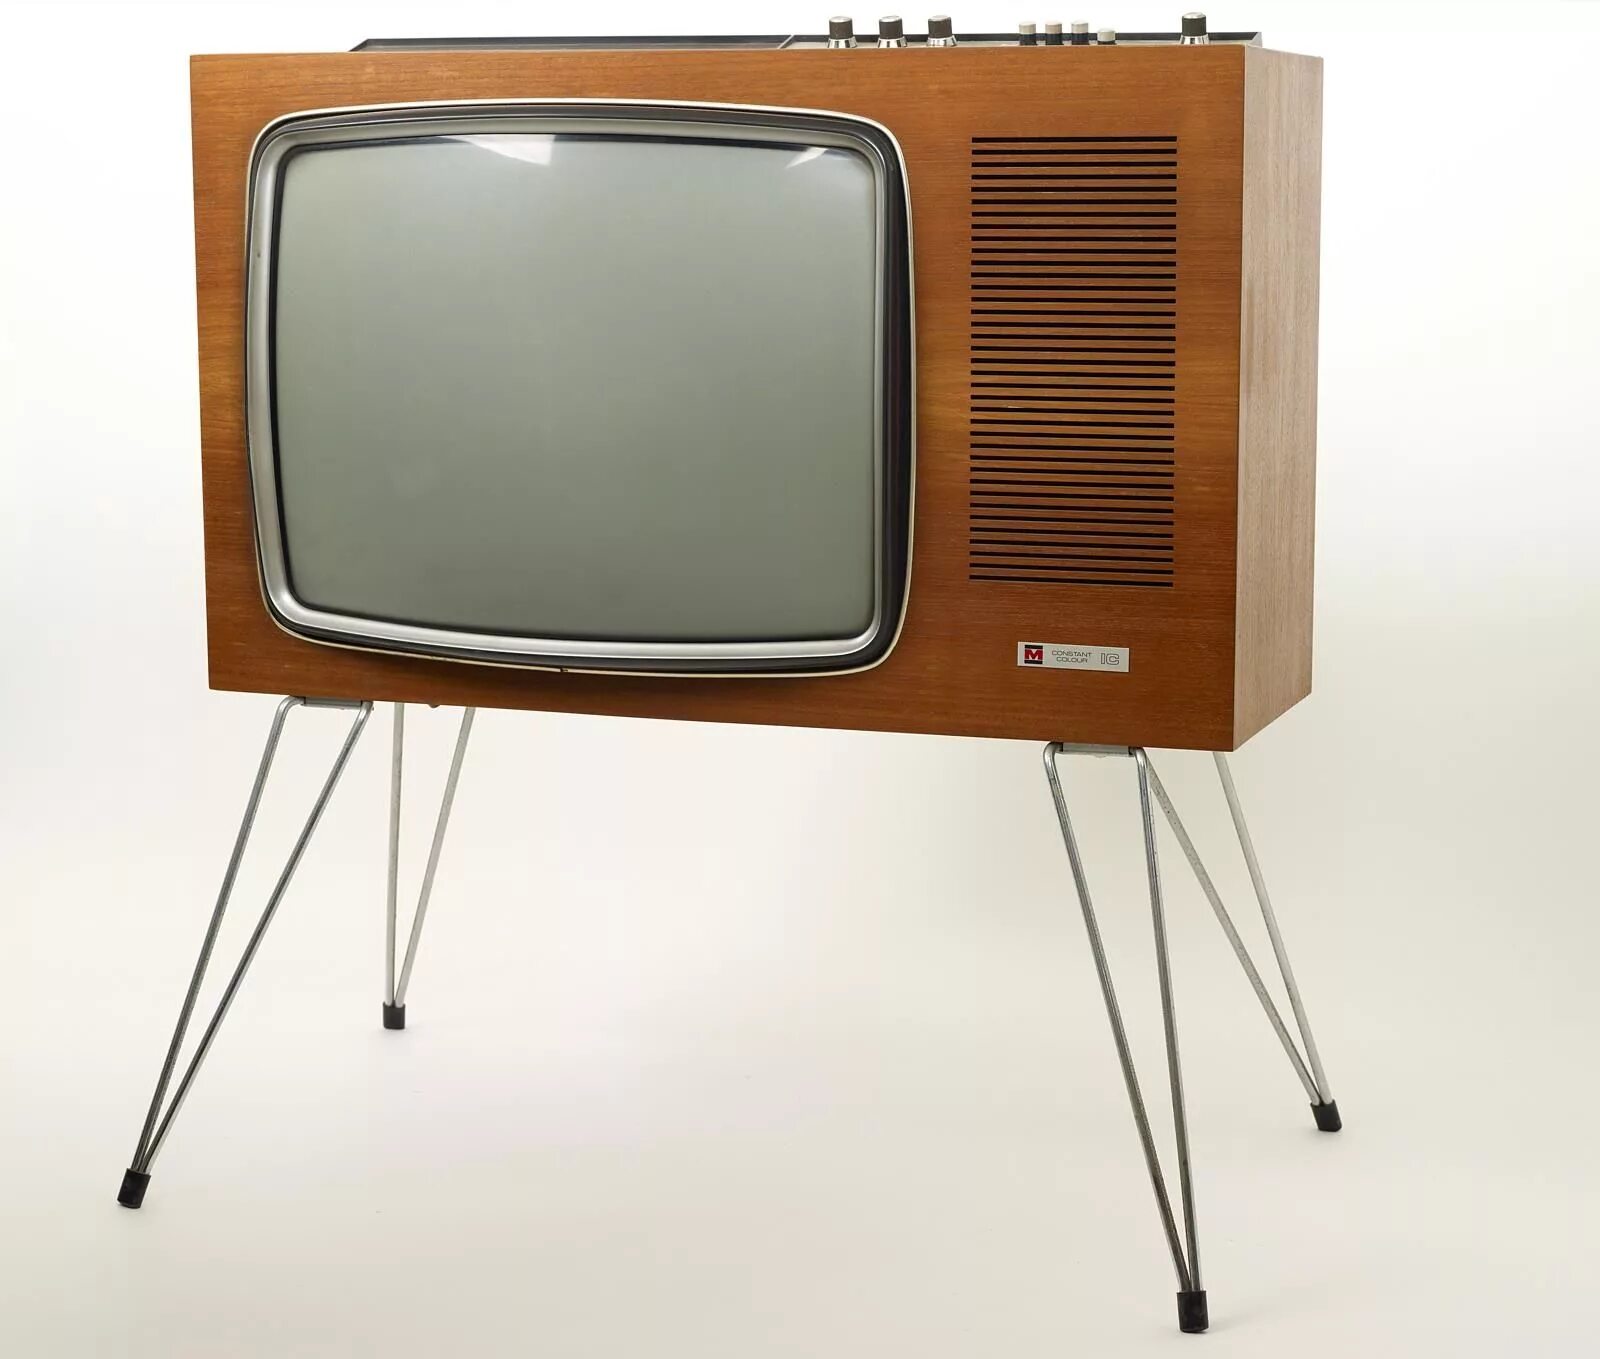 Телевизор National Vintage 1970. Dex 1970 телевизор. Телевизоры 60-х.